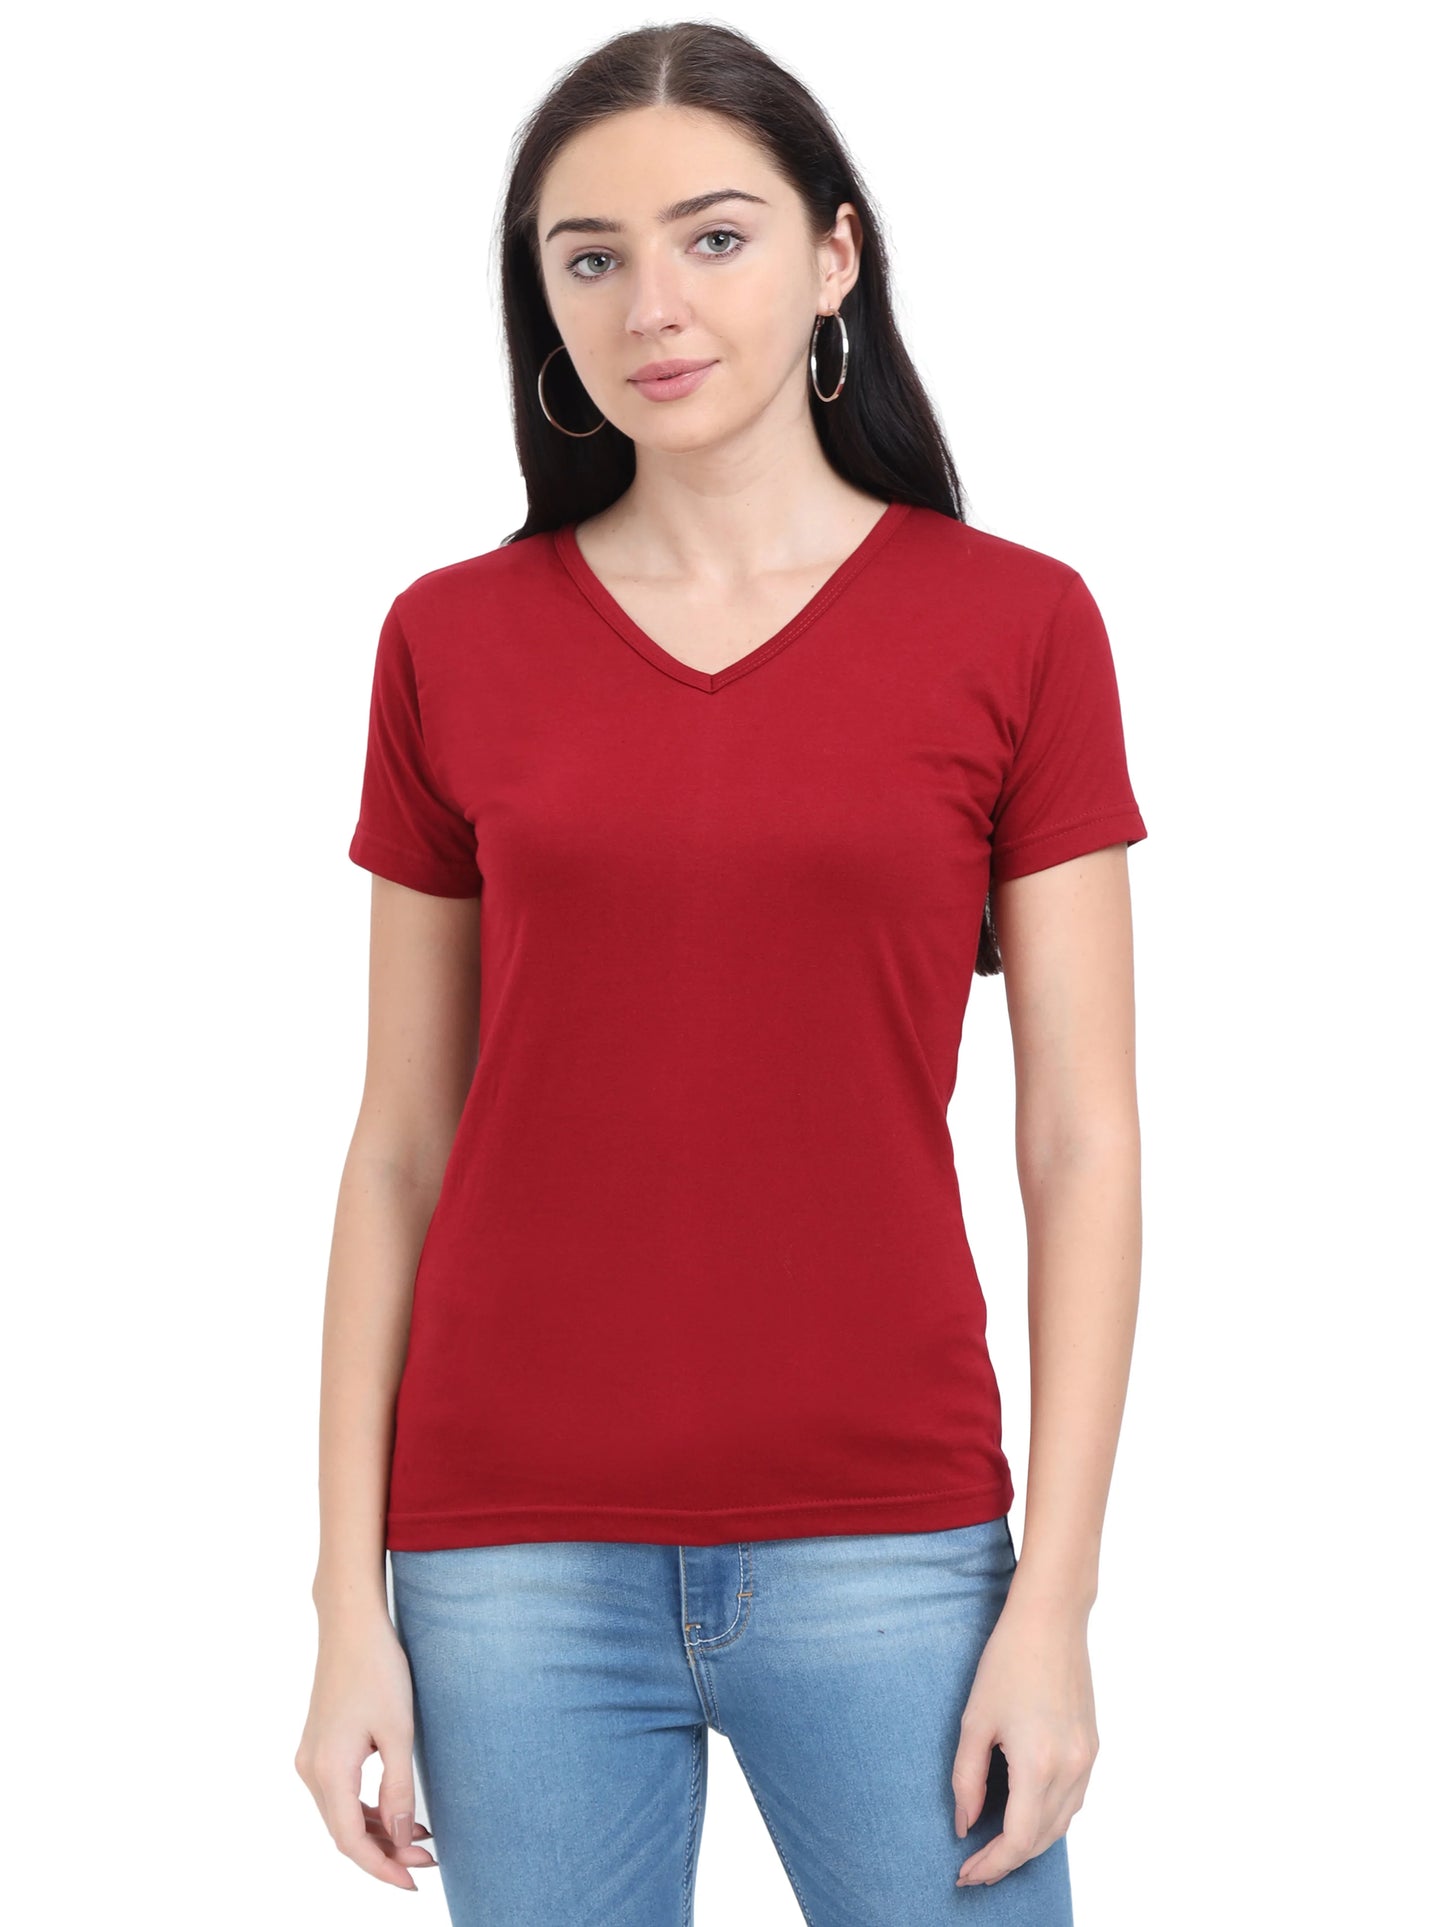 Women's Cotton Plain V Neck Half Sleeve Maroon Color T-Shirt